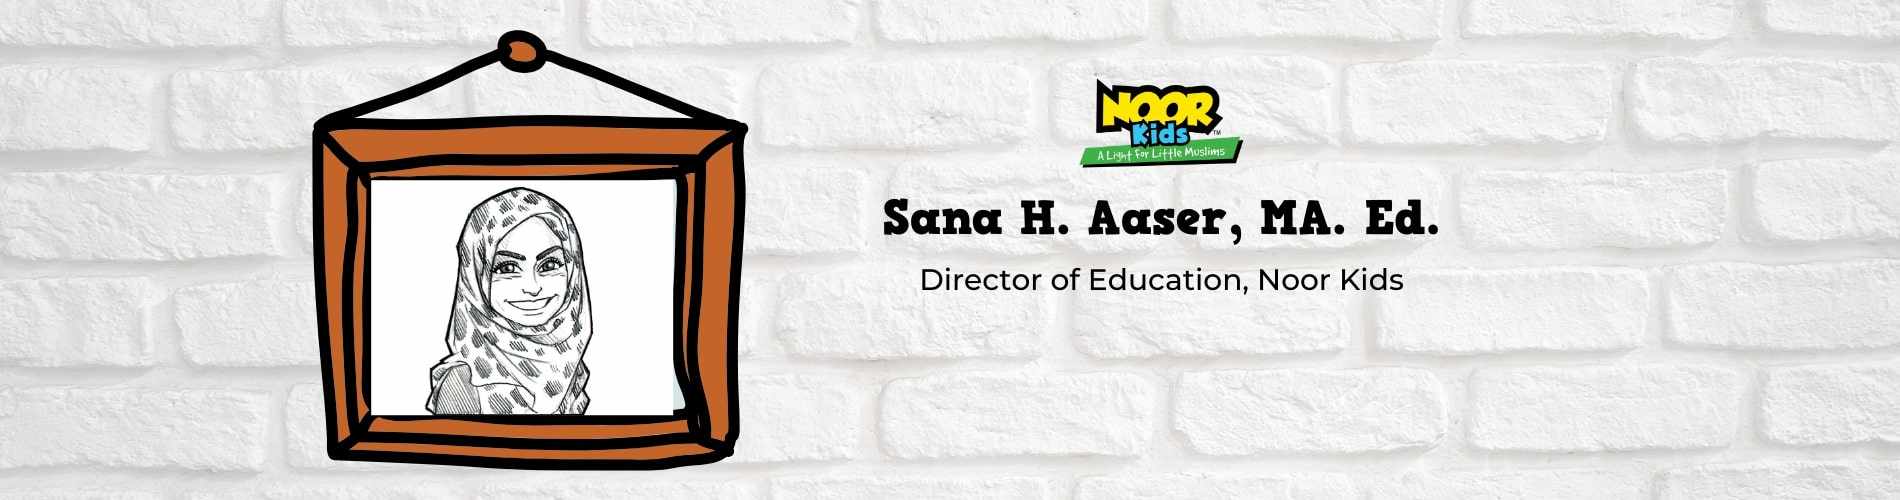 Meet Sana H. Aaser, MA. Ed., Education Director, Noor Kids